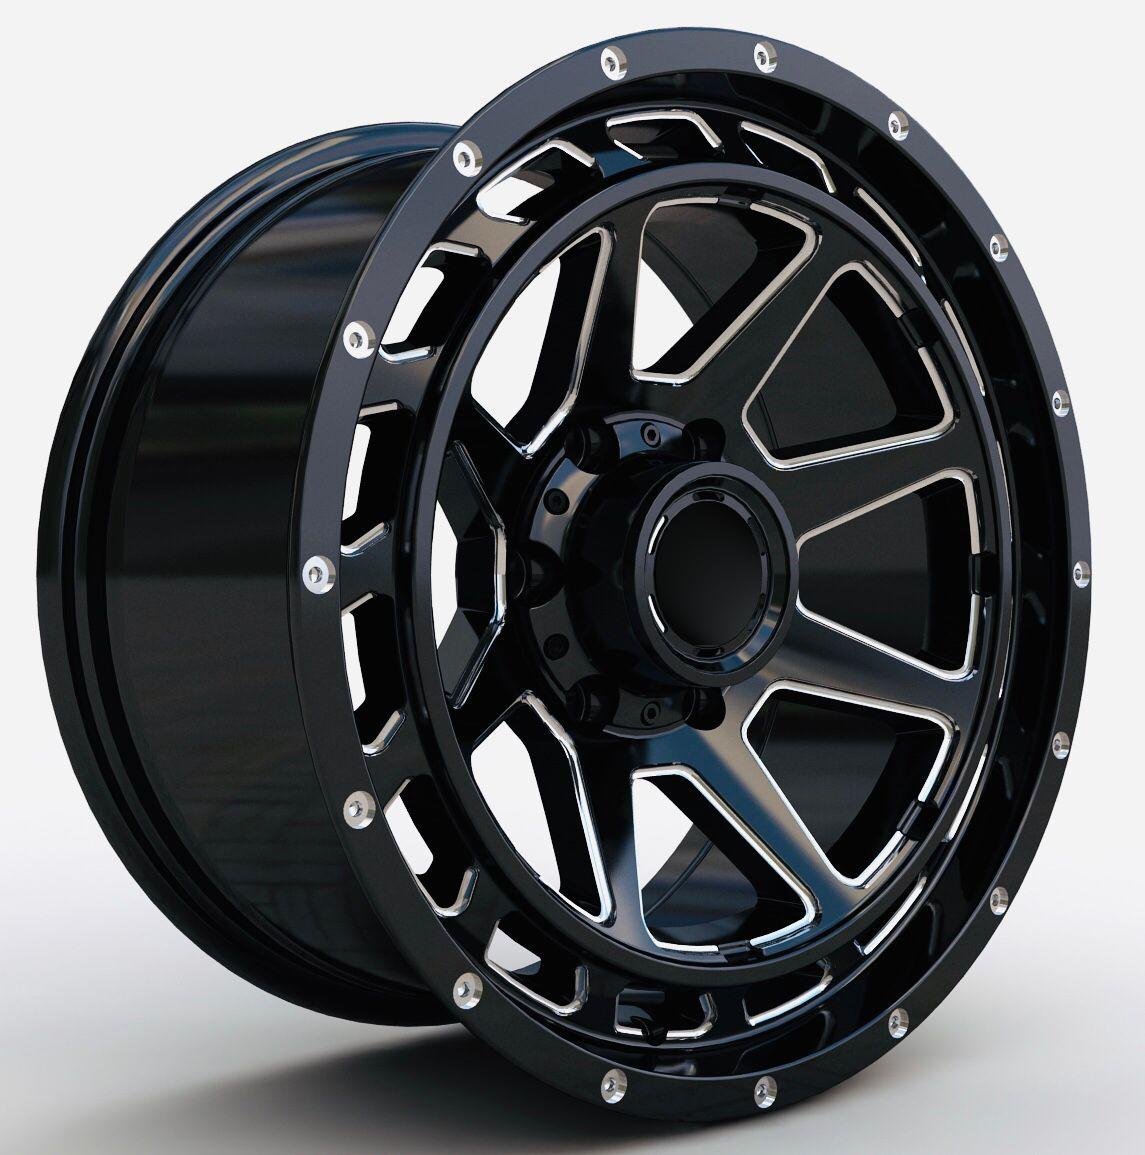 Aluminum Alloy Wheels-6x139.7 2